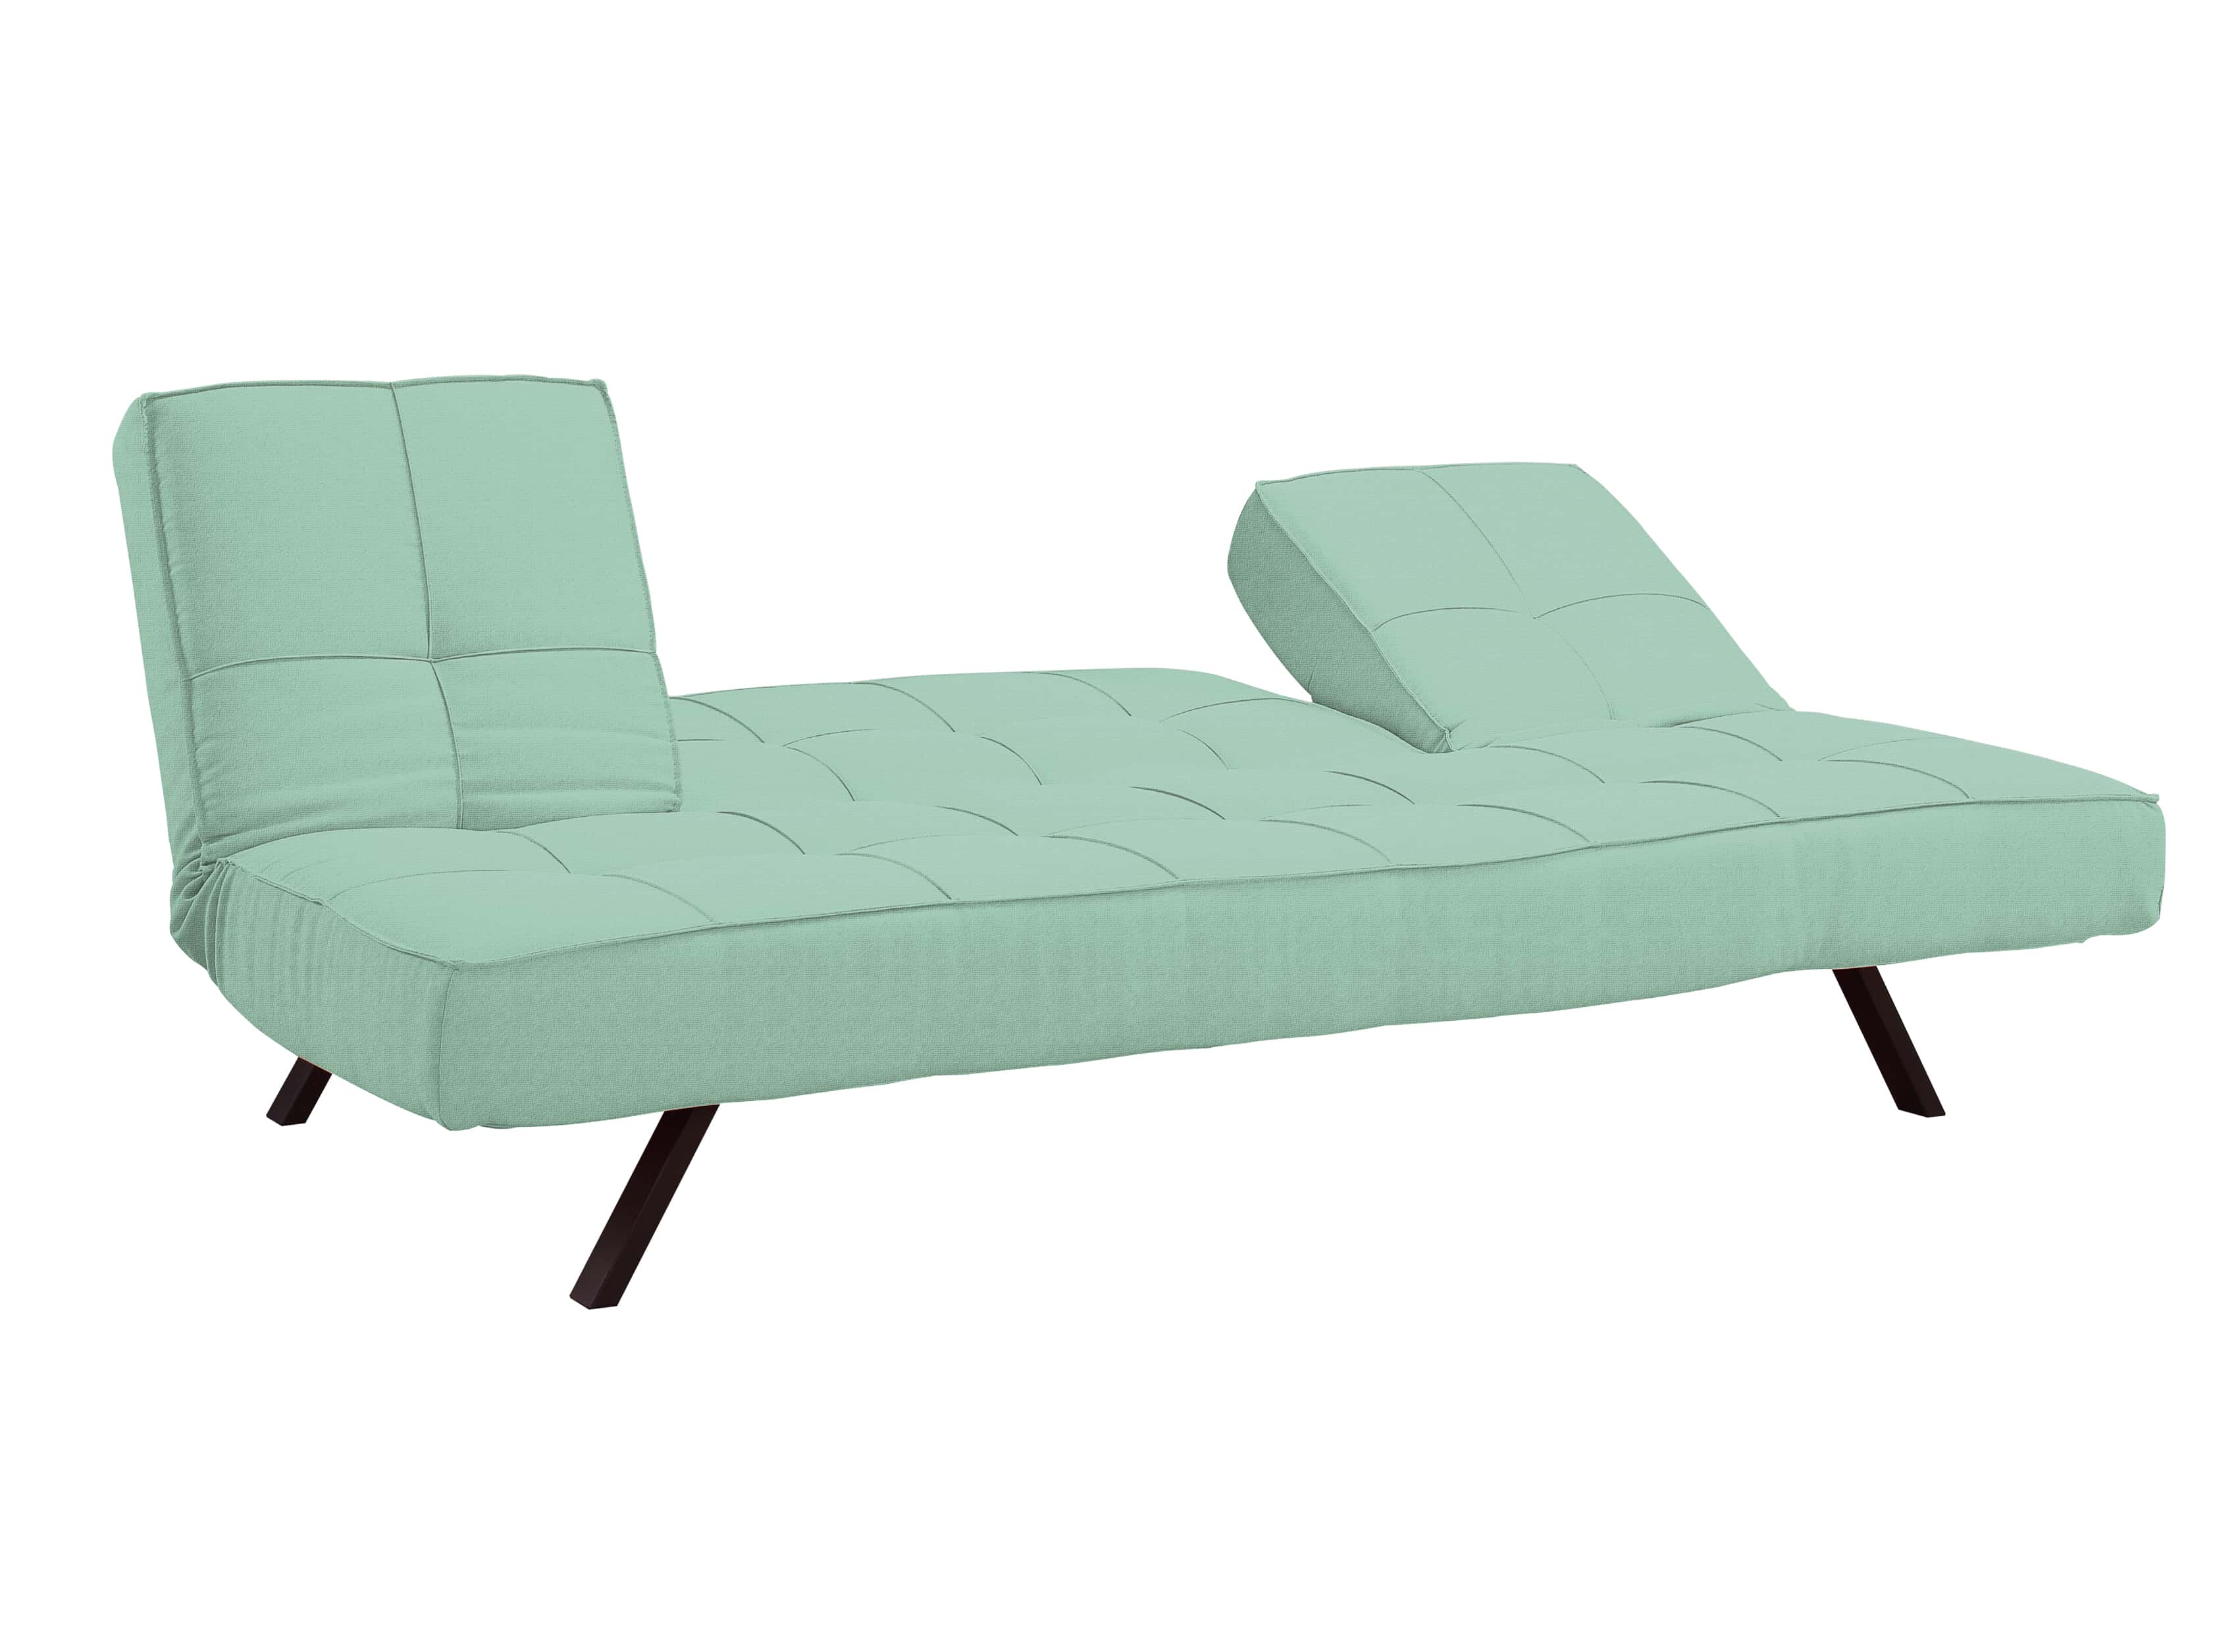 Copa Convertible Sofa Sea Foam Green by Serta Lifestyle